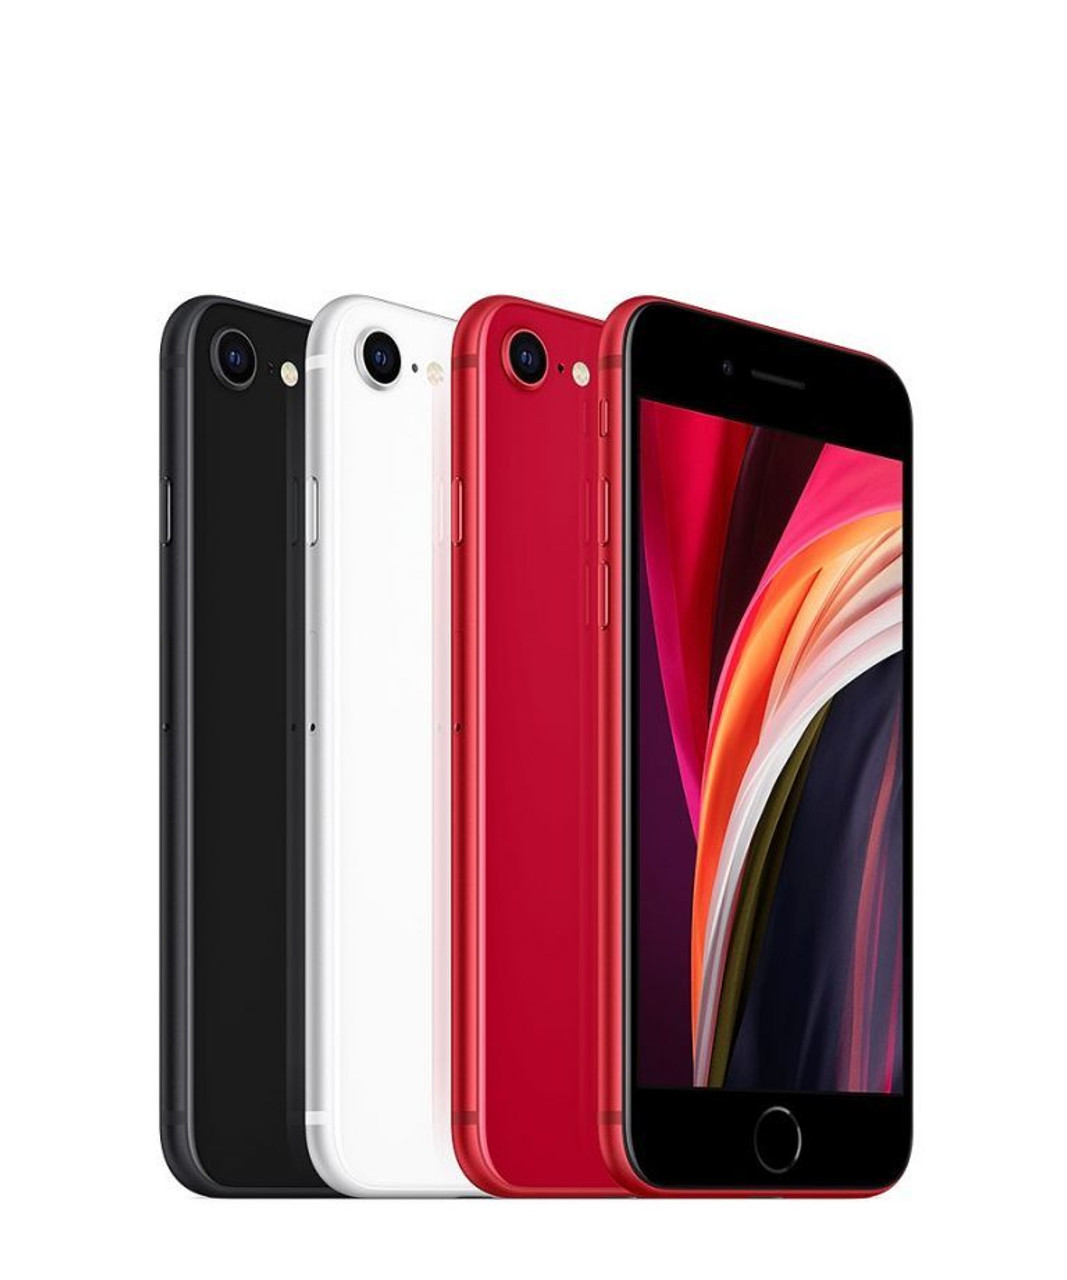 Apple iPhone SE 2 (128GB) Unlocked/AT&T/Verizon/T-Mobile